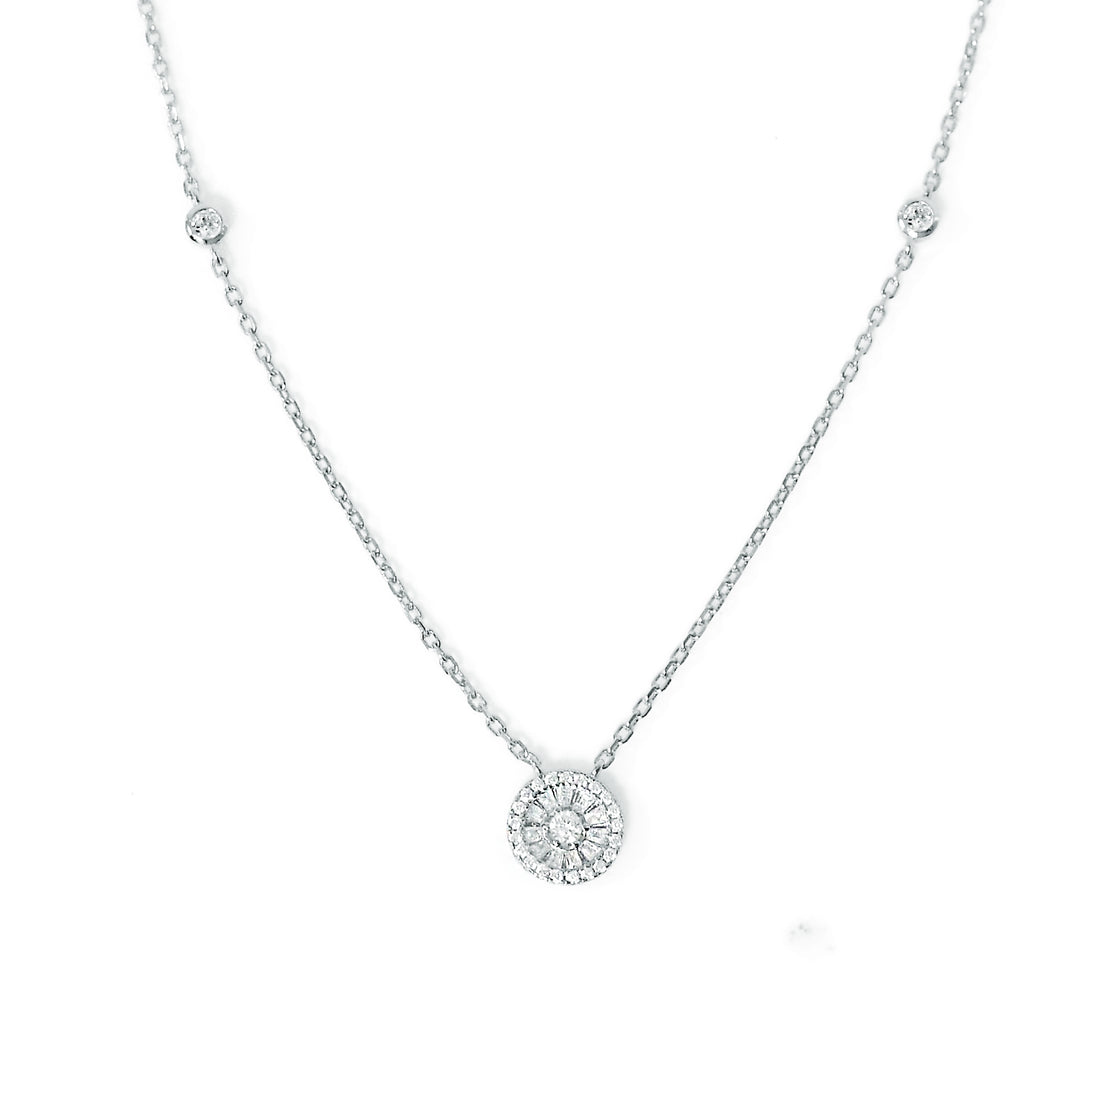 Elegant Silver Necklace with Sparkling Zircon Pendant